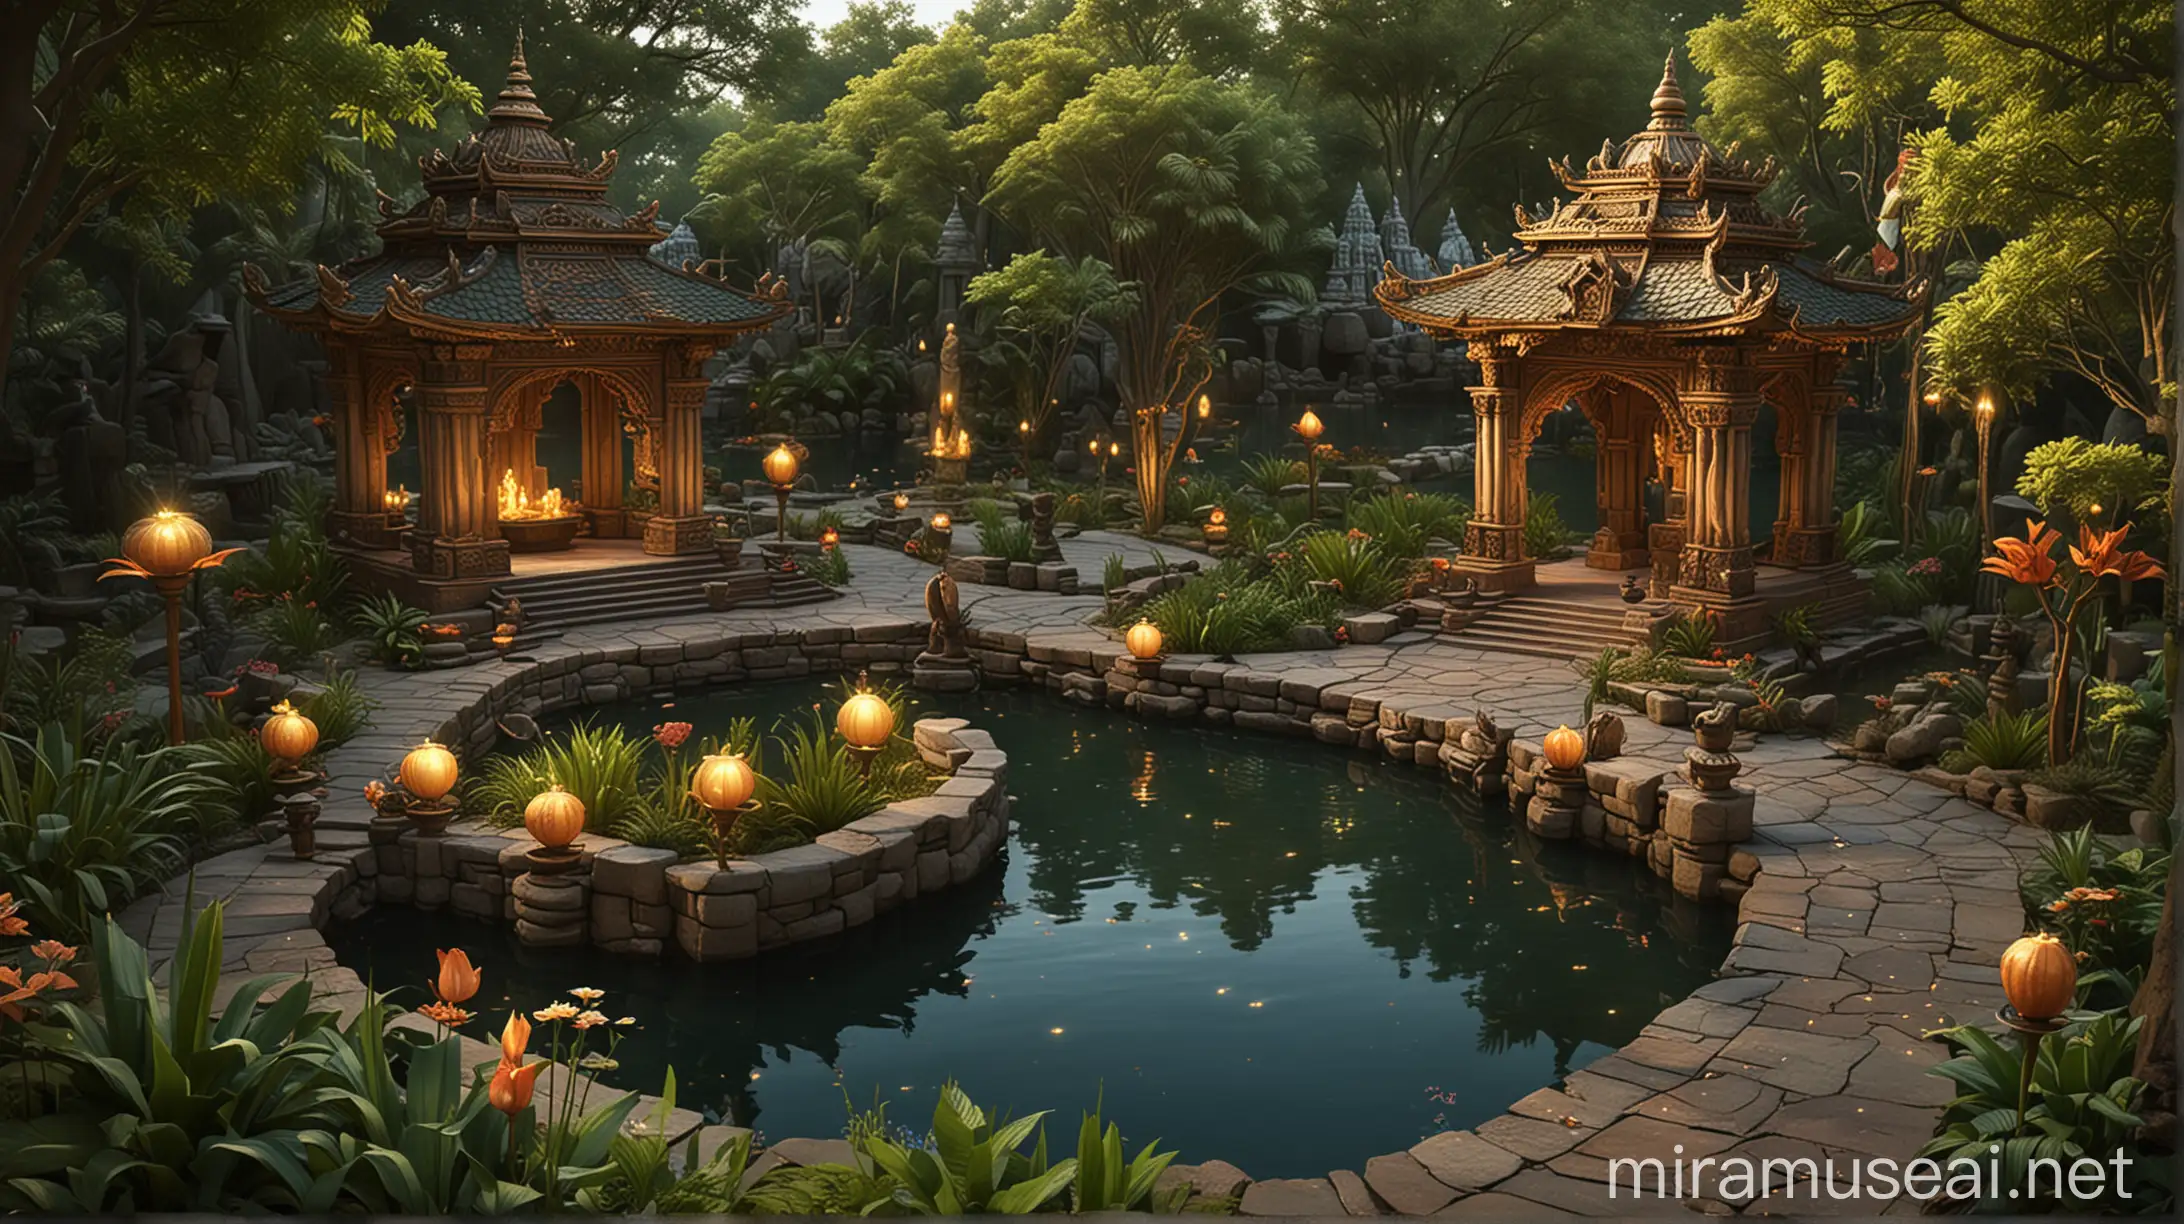 Hindu Gods Theme Park Inspired by Avatars Pandora Glowing Temples Mythical Rides Spiritual Gardens